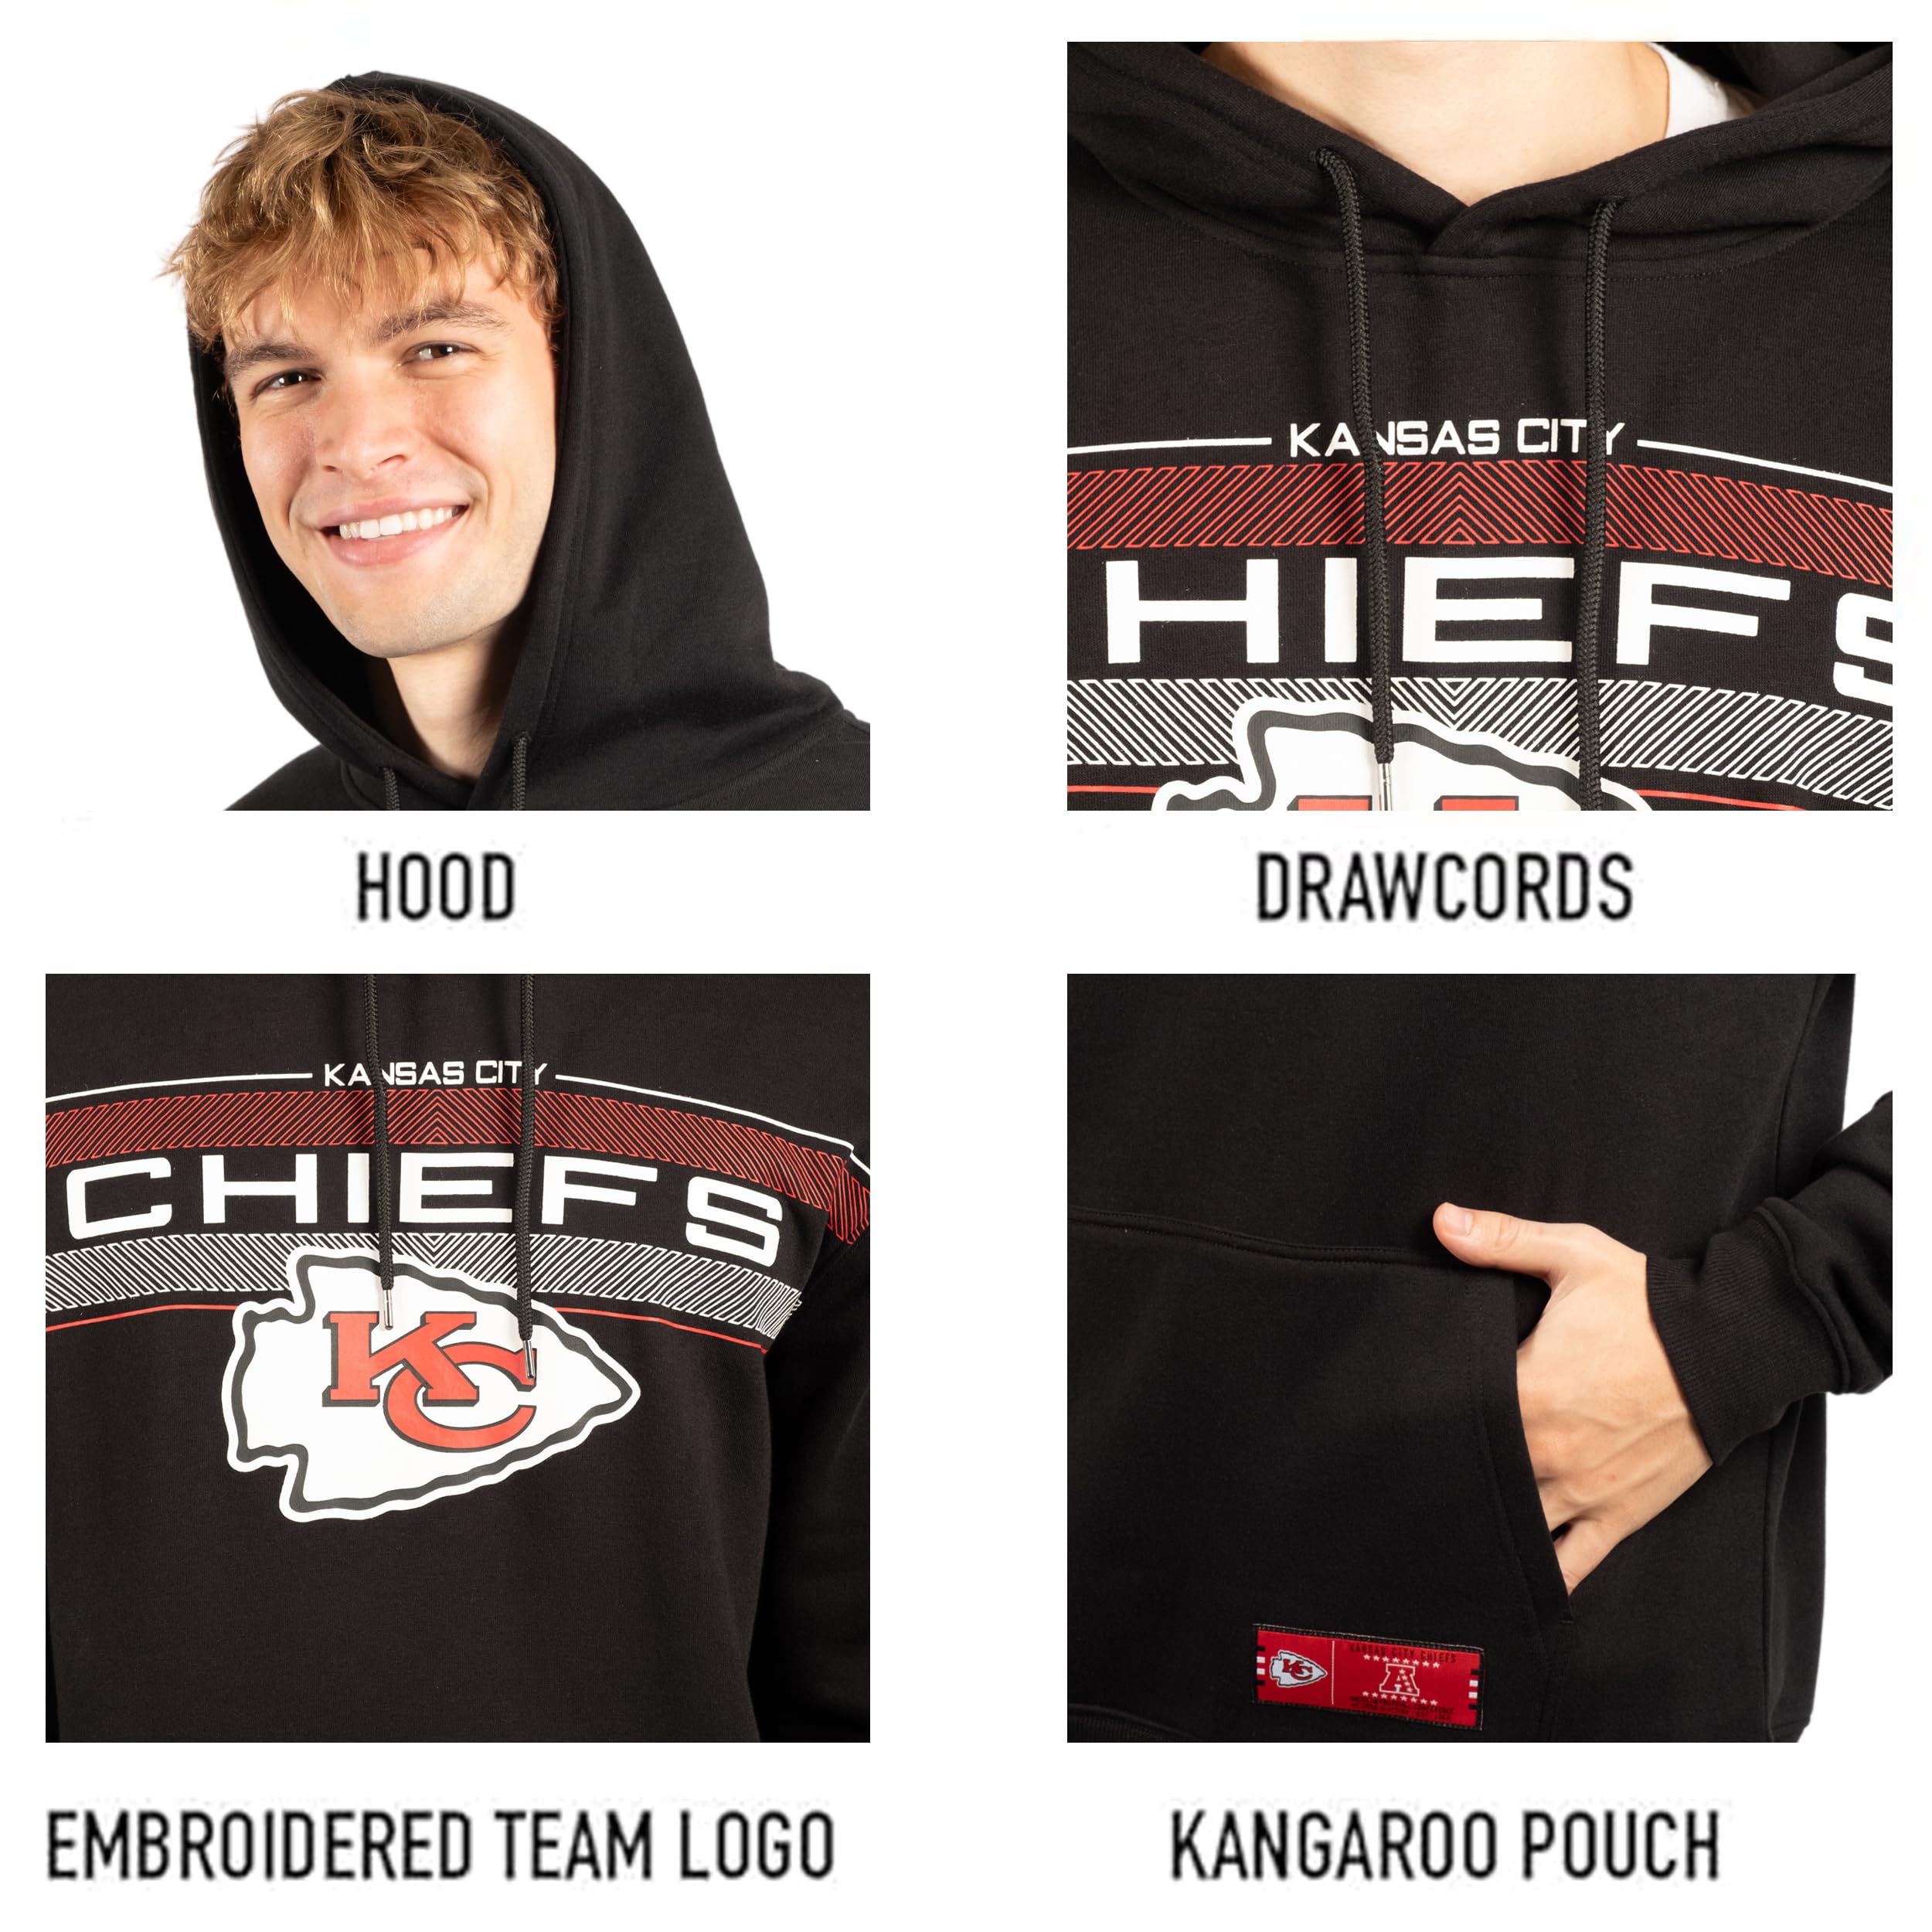 Ultra Game NFL Kansas City Chiefs Mens Super Soft Supreme Pullover Hoodie Sweatshirt|Kansas City Chiefs